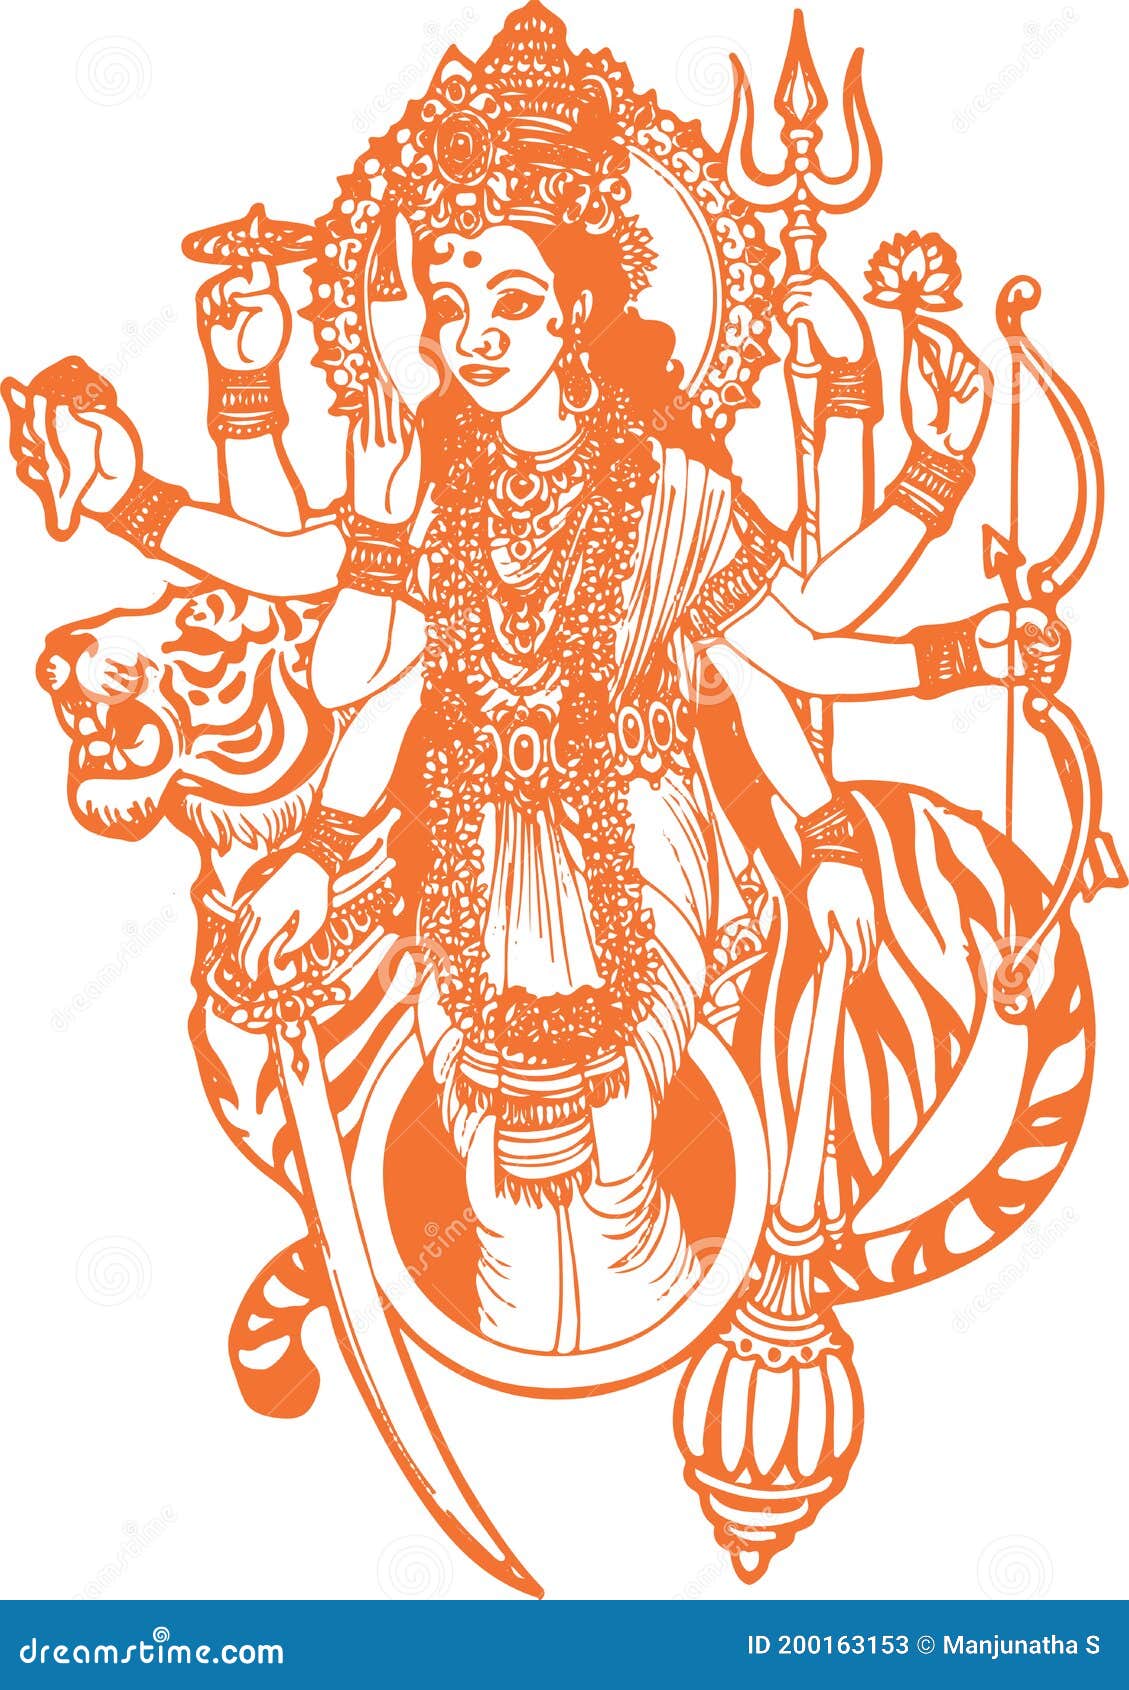 Sketch of Goddess Durga Maa or Durga Closeup Face Design Element in Outline  Editable Vector Illustration for a Dasara Festival Stock Vector -  Illustration of diwali, line: 197203849